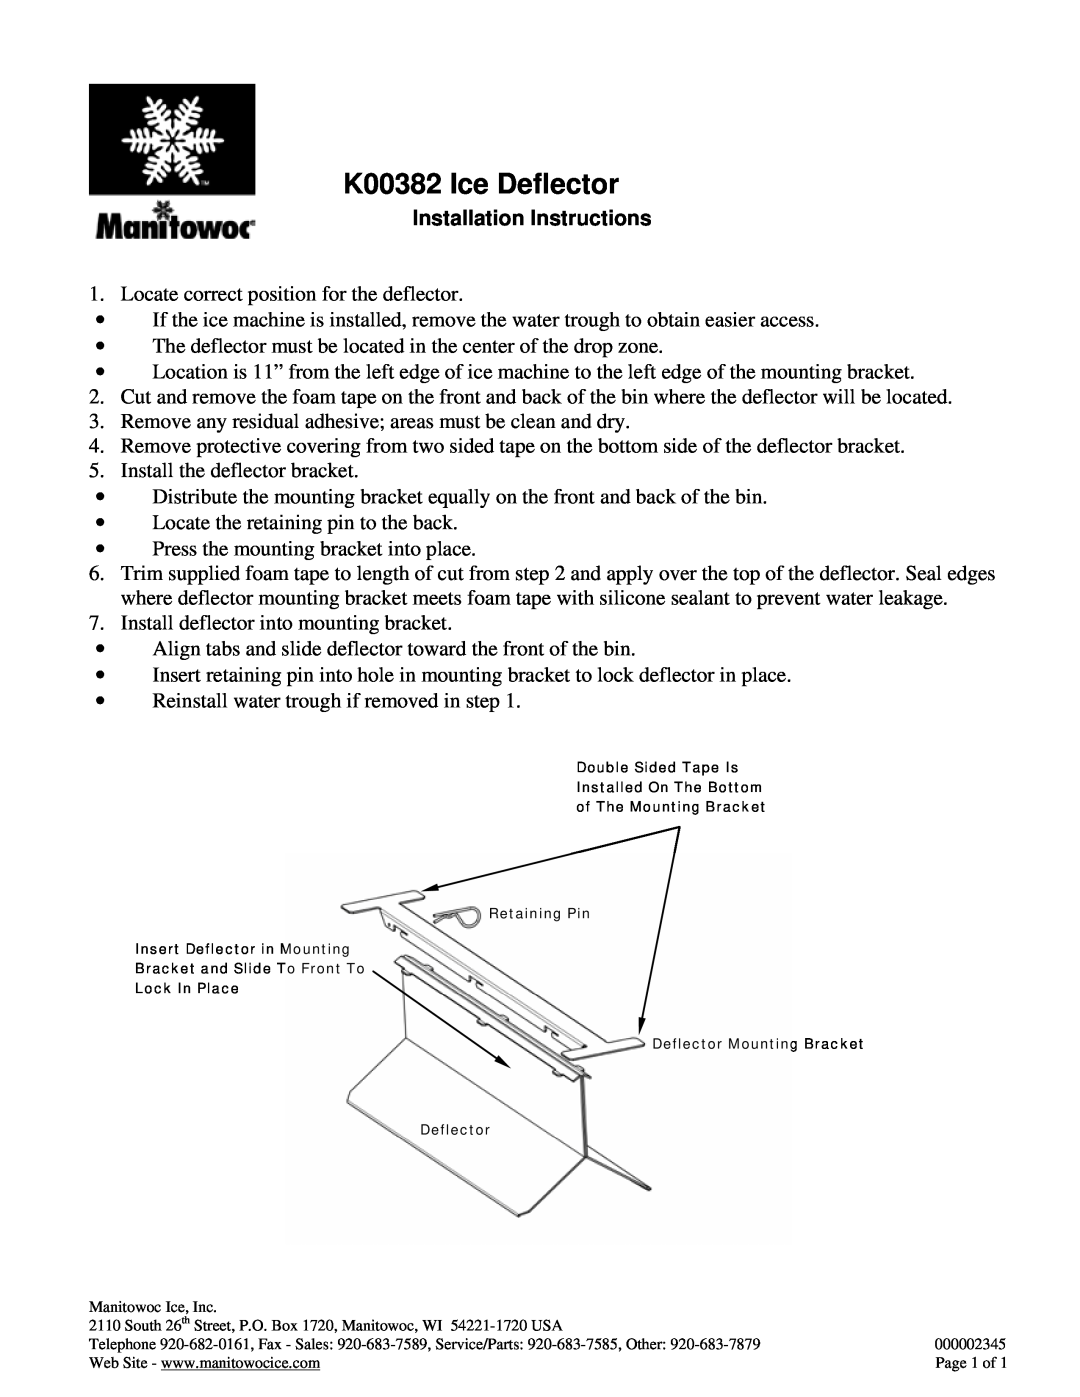 Manitowoc Ice installation instructions K00382 Ice Deflector, Installation Instructions 